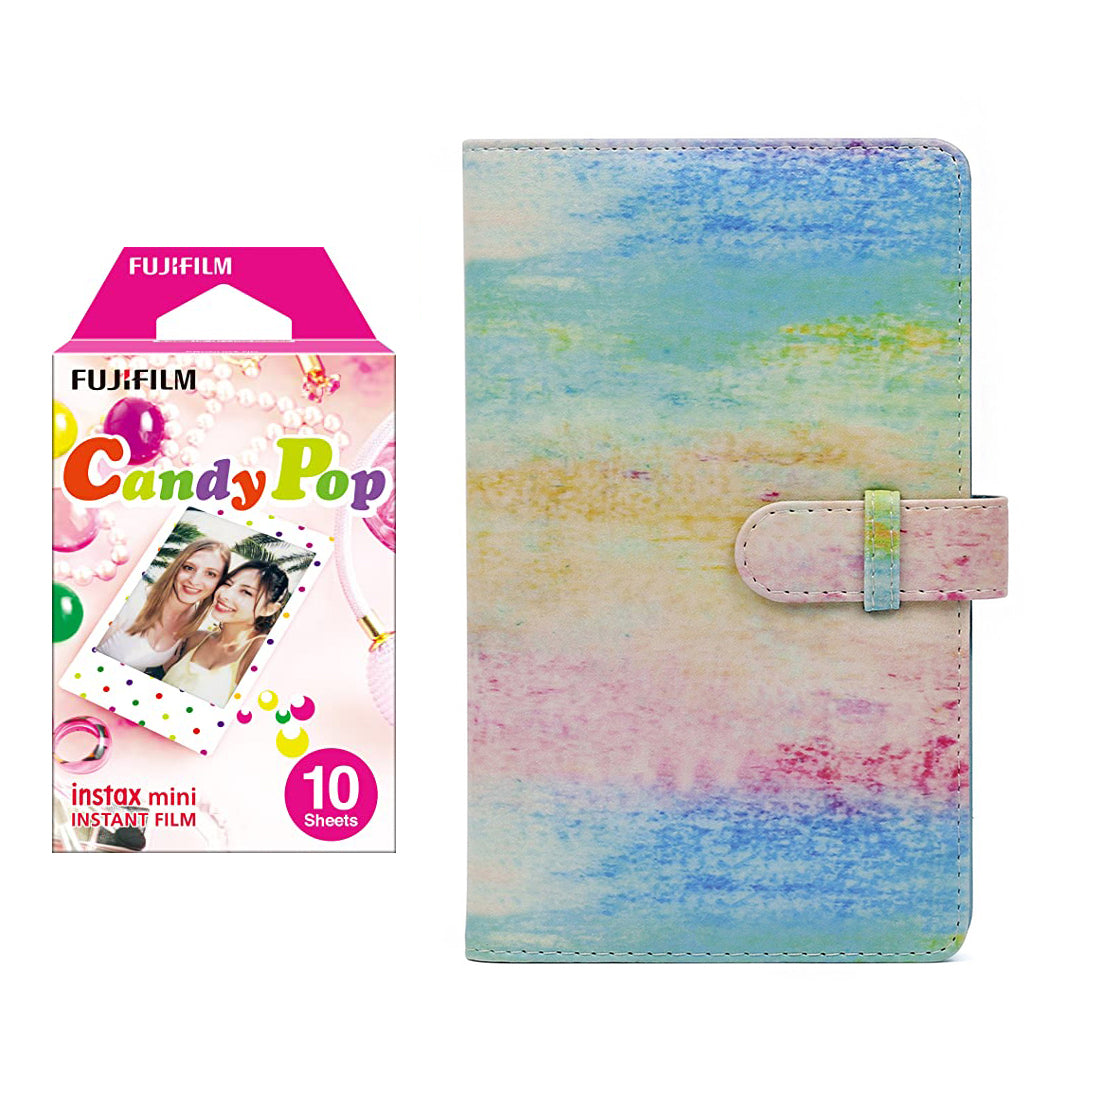 Fujifilm Instax Mini 10X1 candy pop Instant Film with 96-sheet Album for mini film